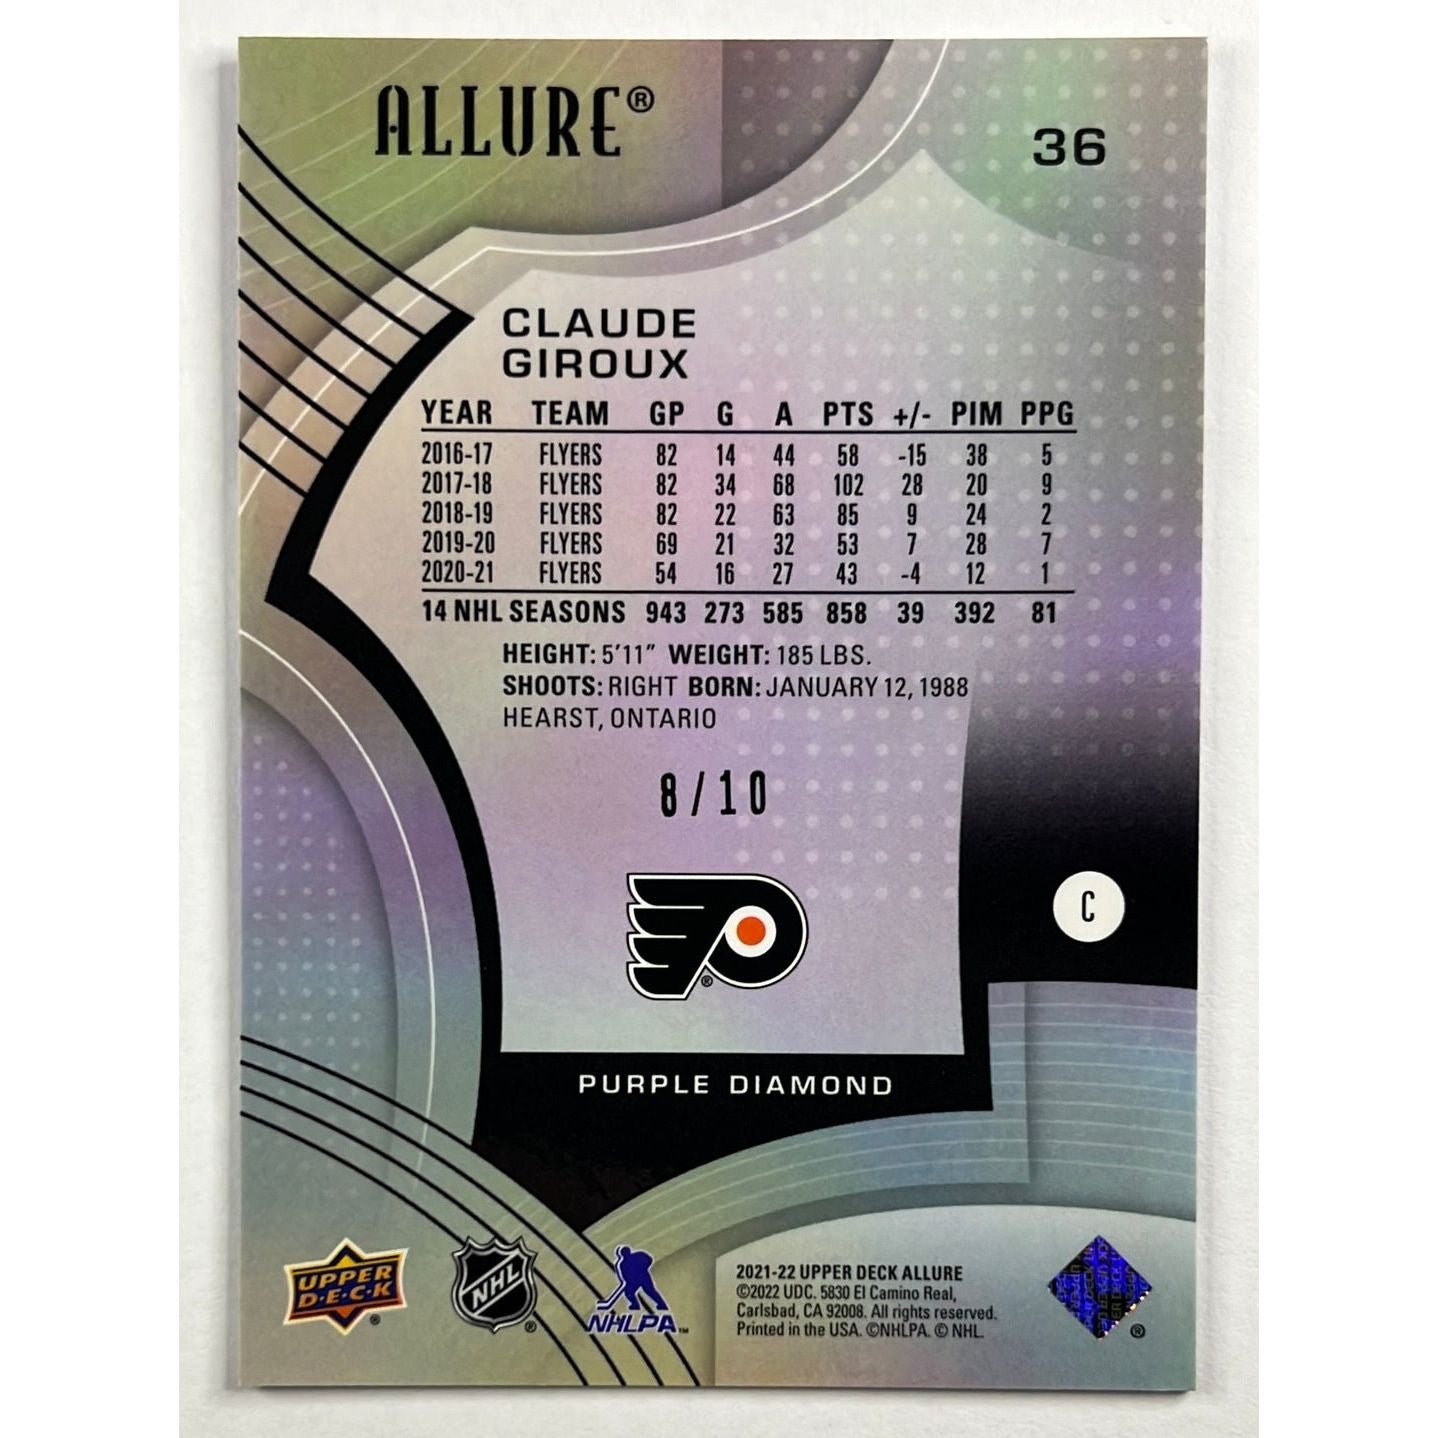 2021-22 Allure Claude Giroux Purple Diamond 8/10